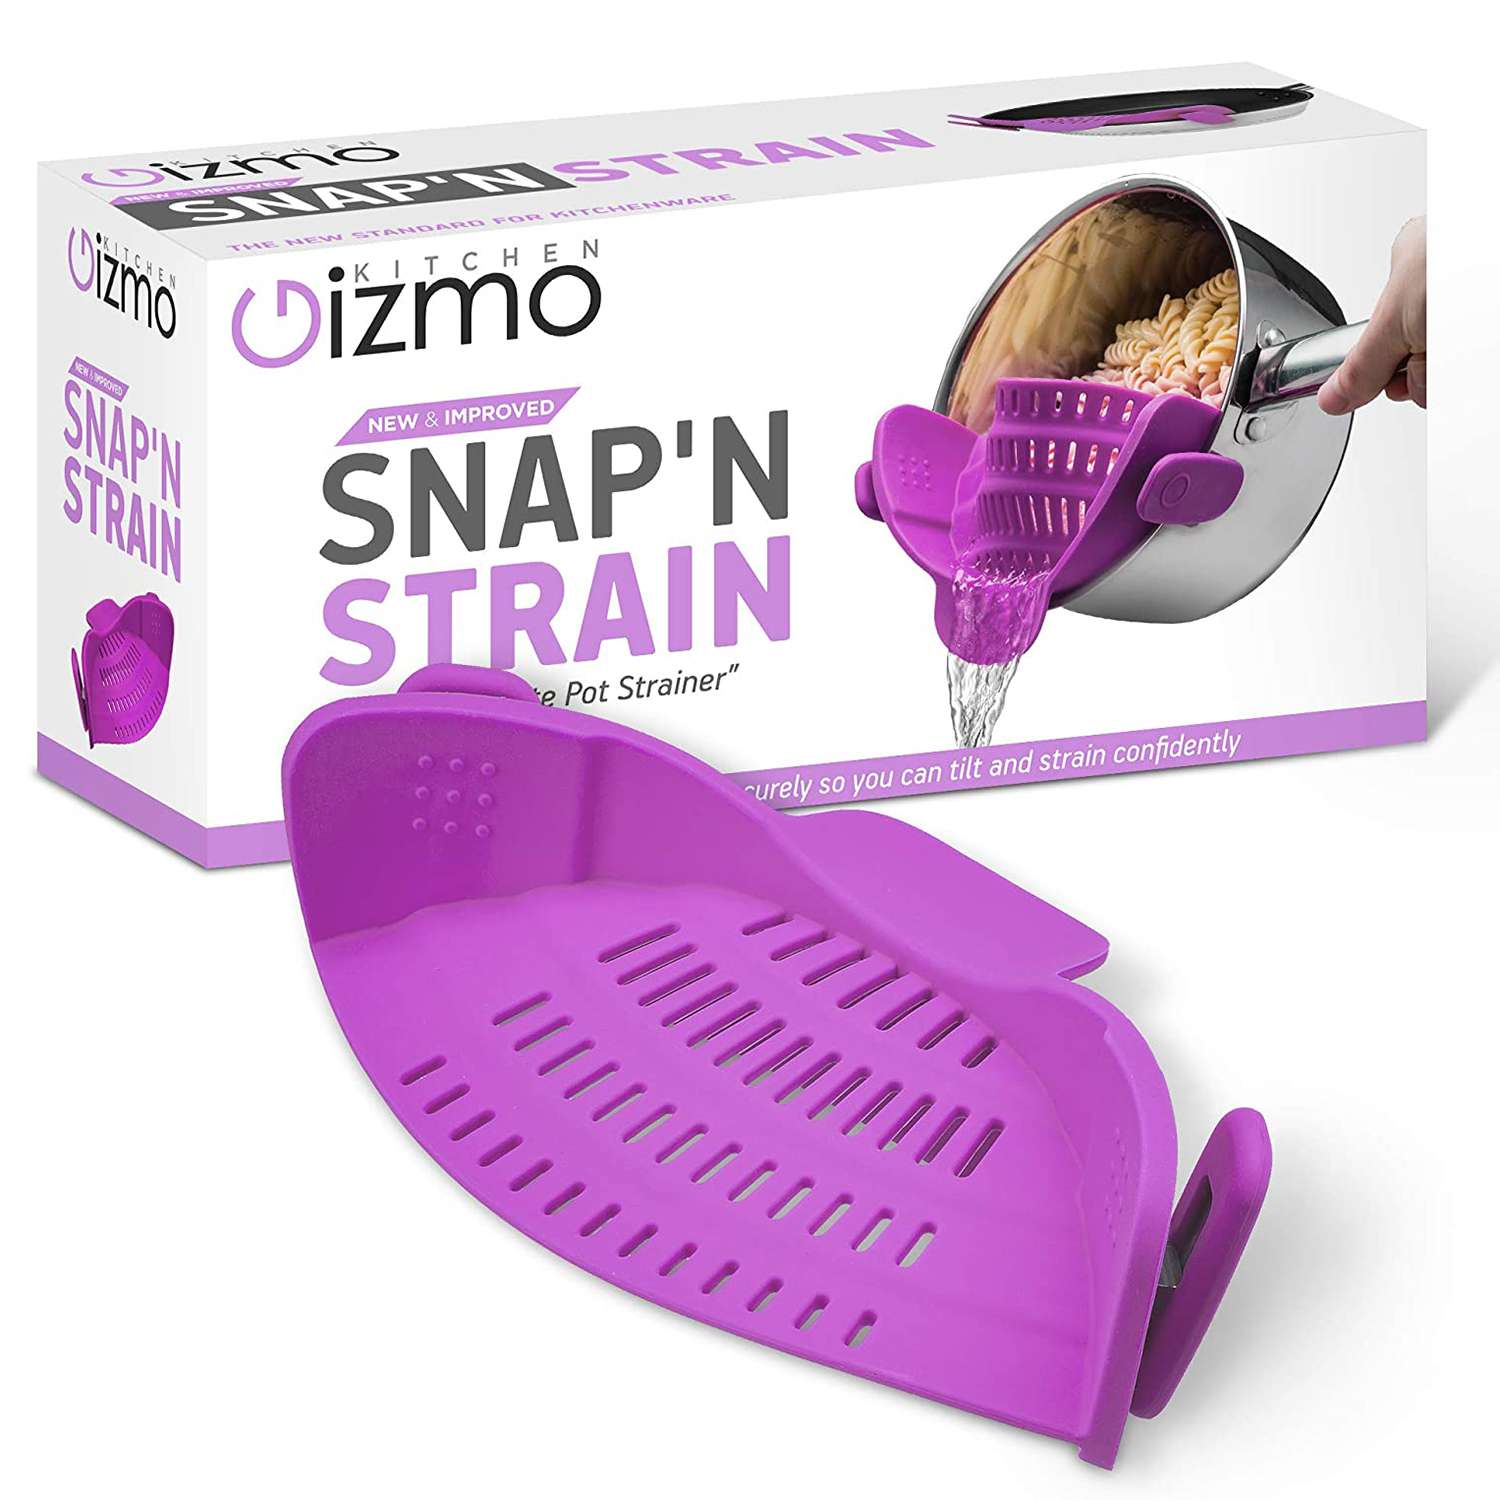 Kitchen Gizmo Snap 'n Strain Pasta Strainer for sale online